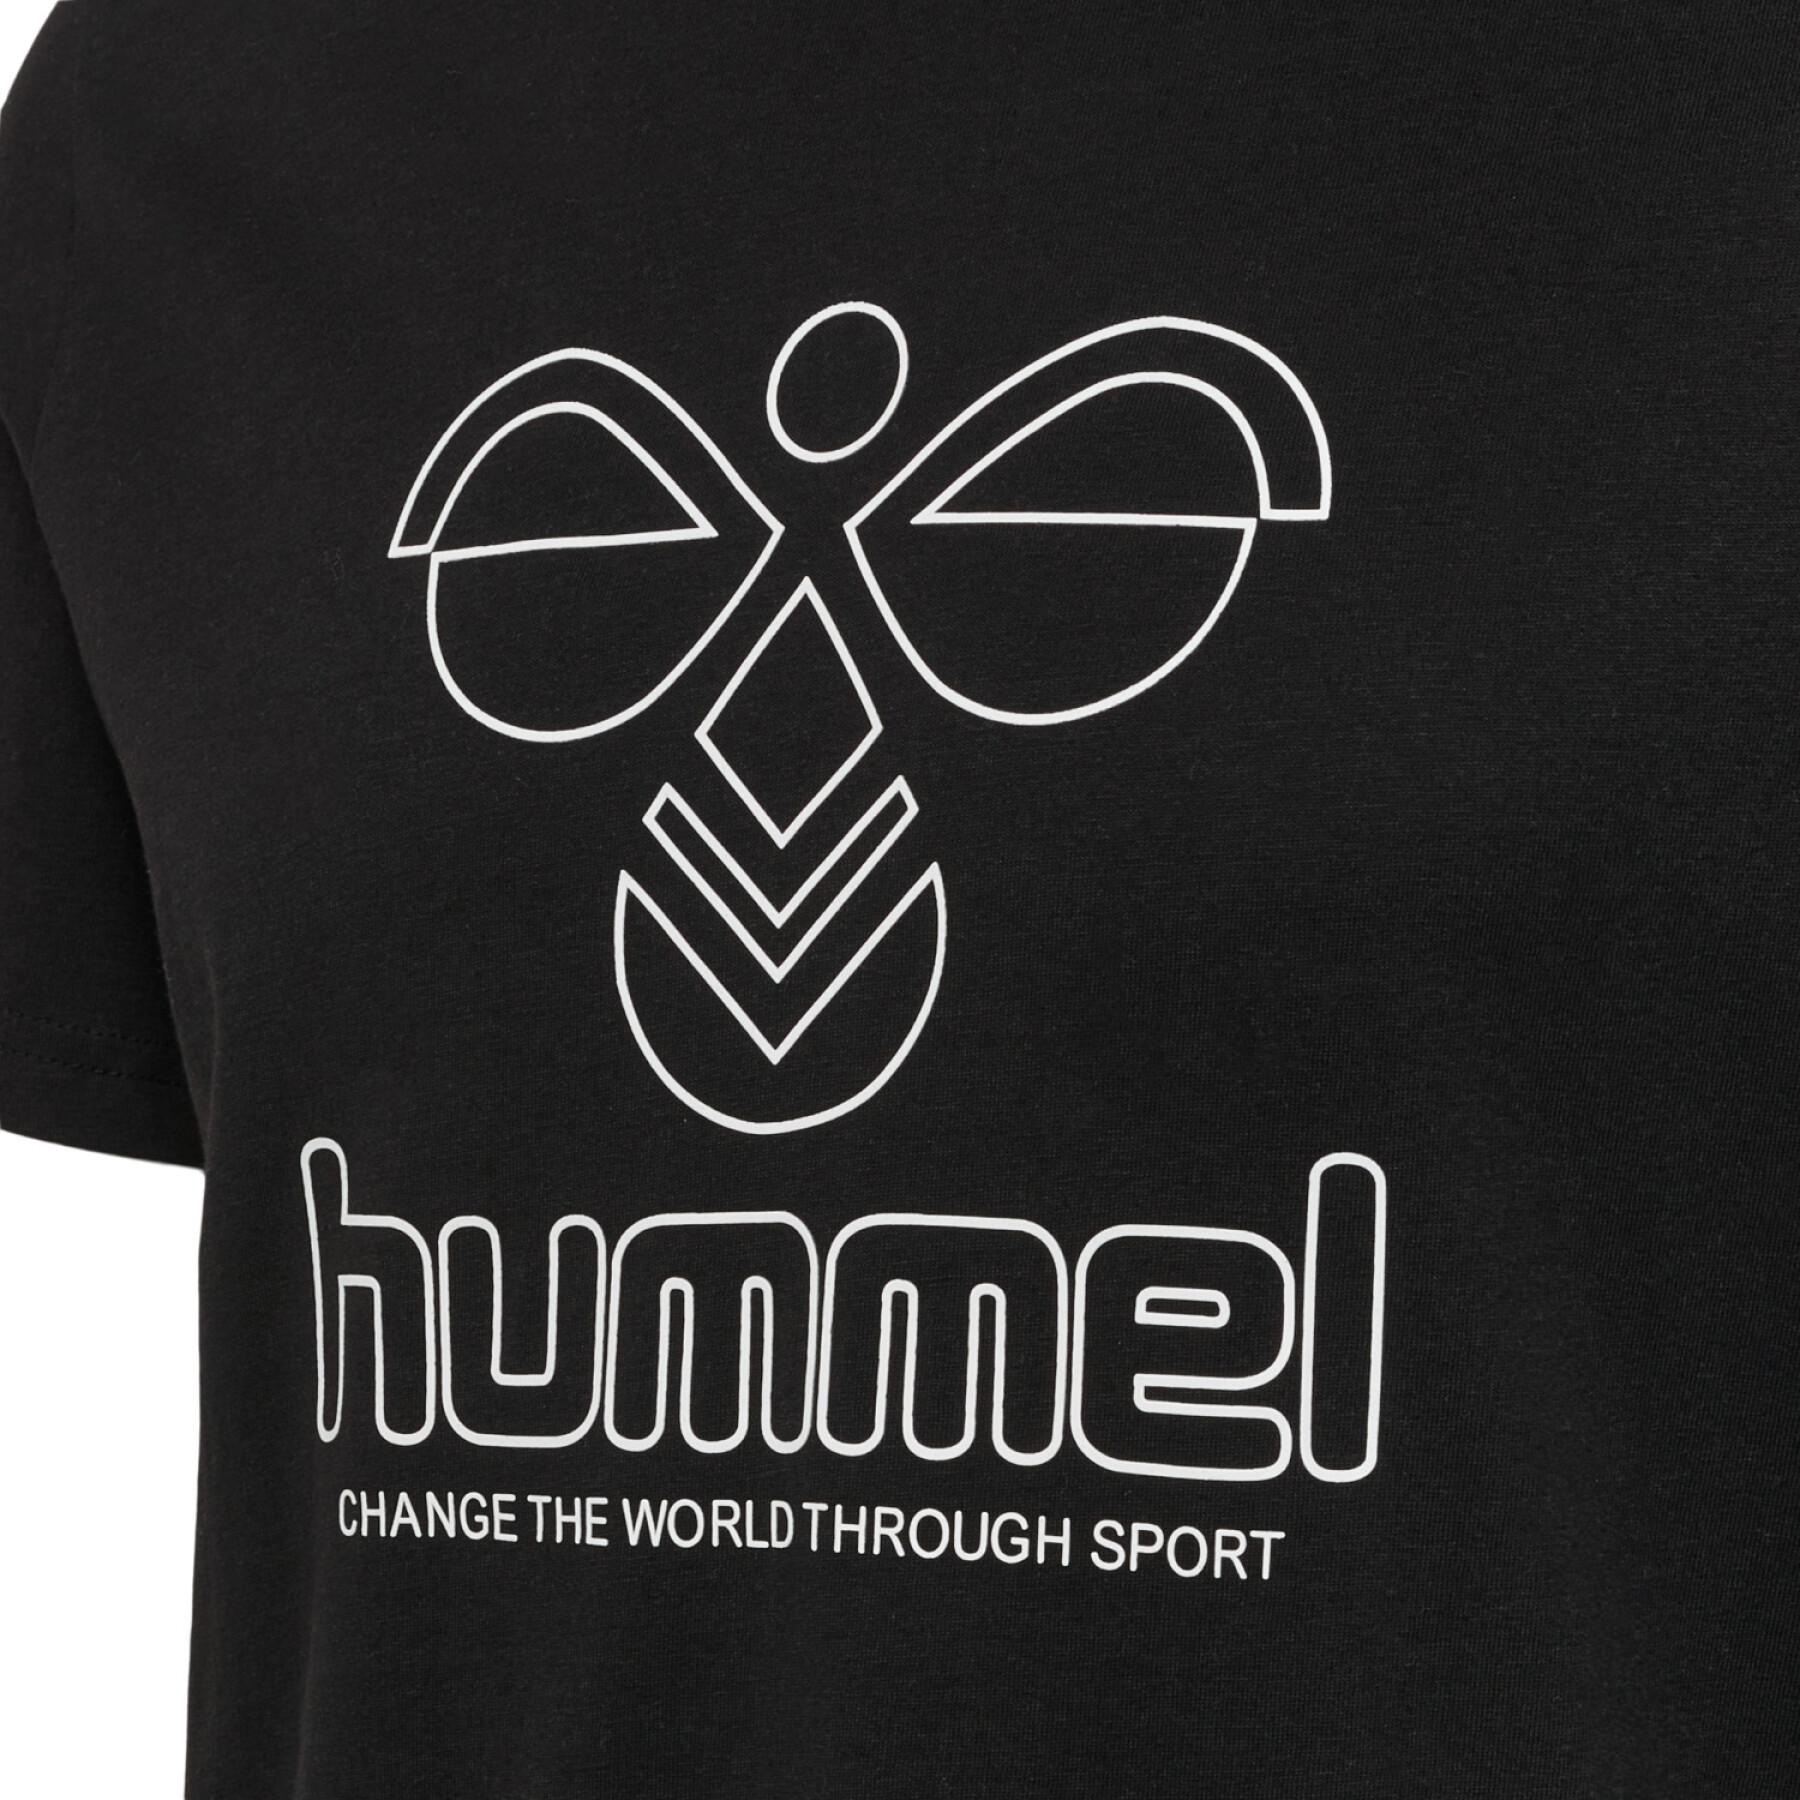 T-shirt Hummel Icons - Hummel - Brands - Lifestyle